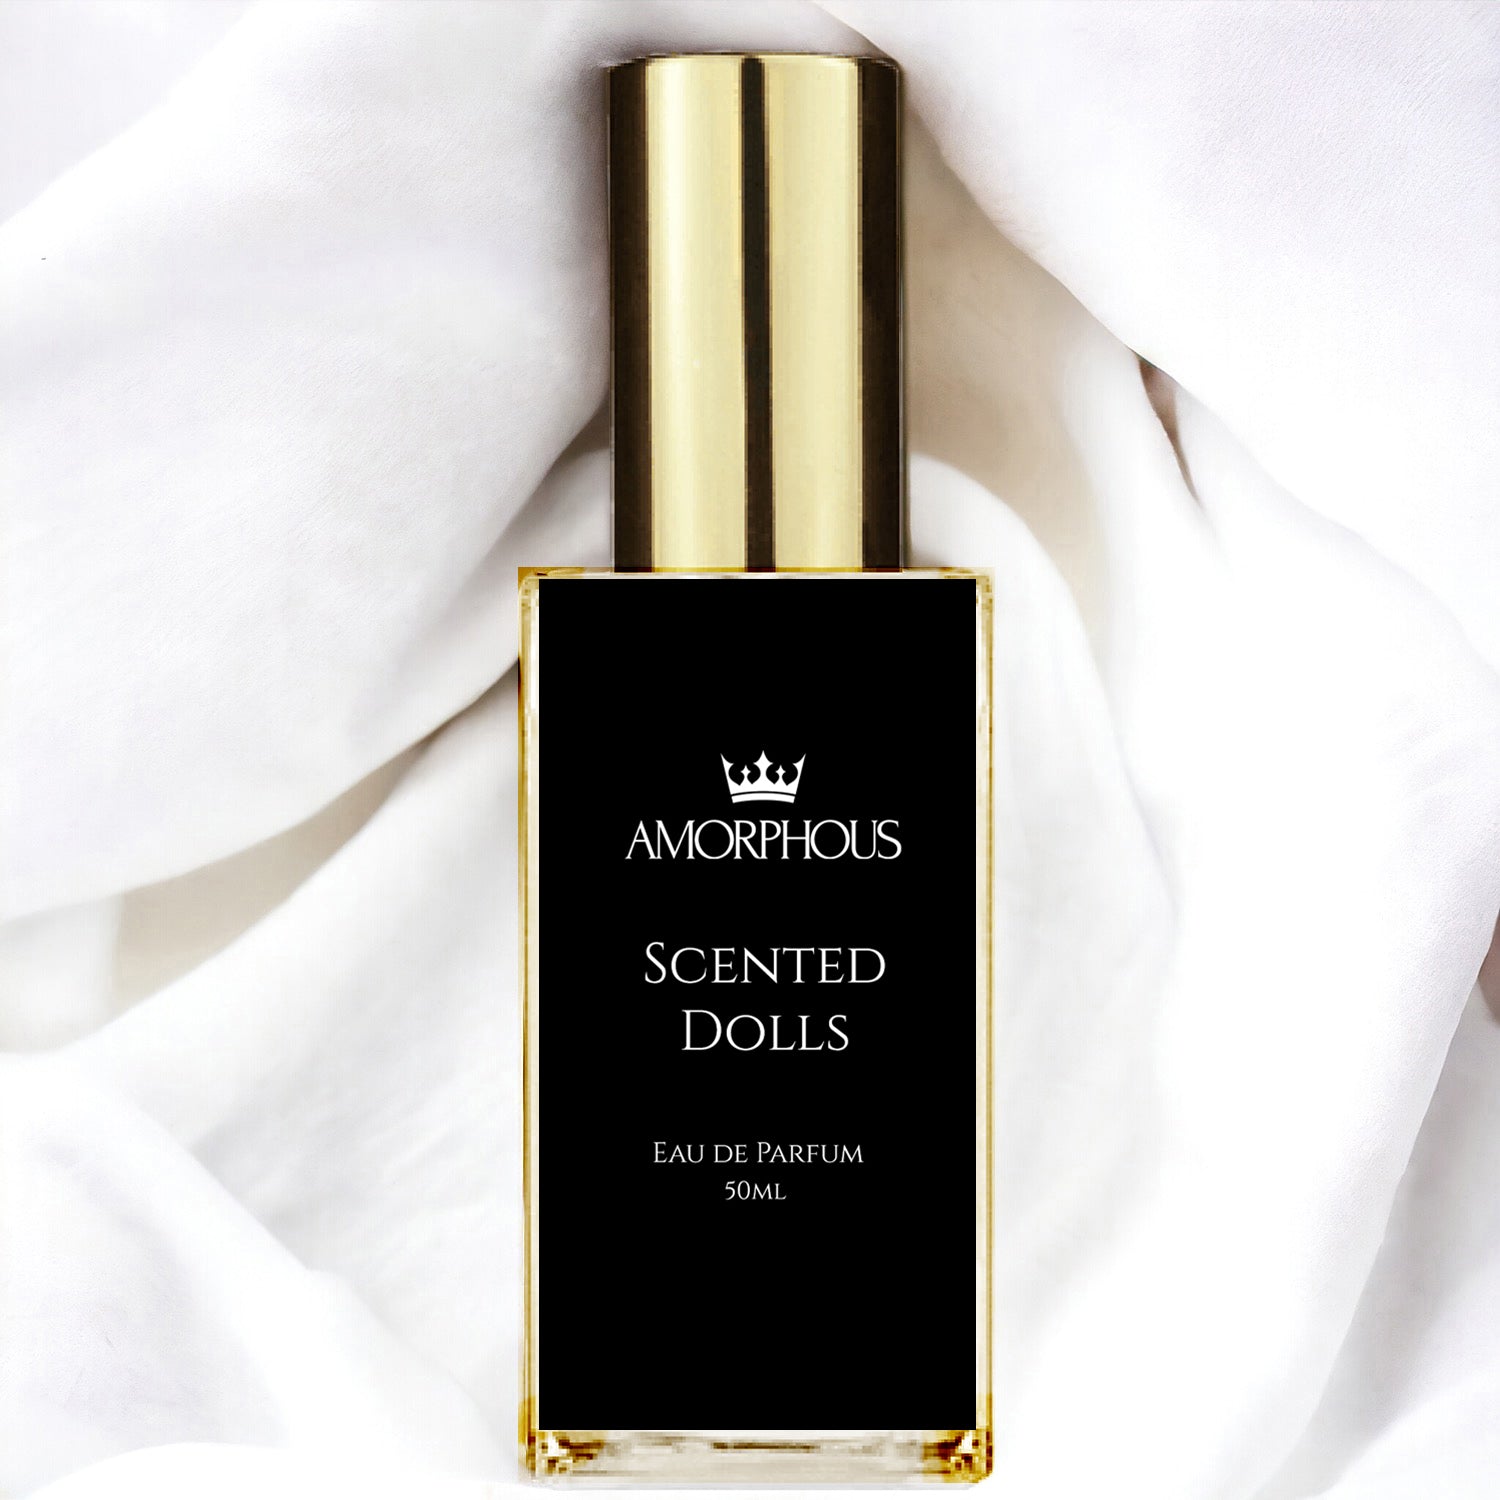 New Perfume Releases – Amorphous Perfume